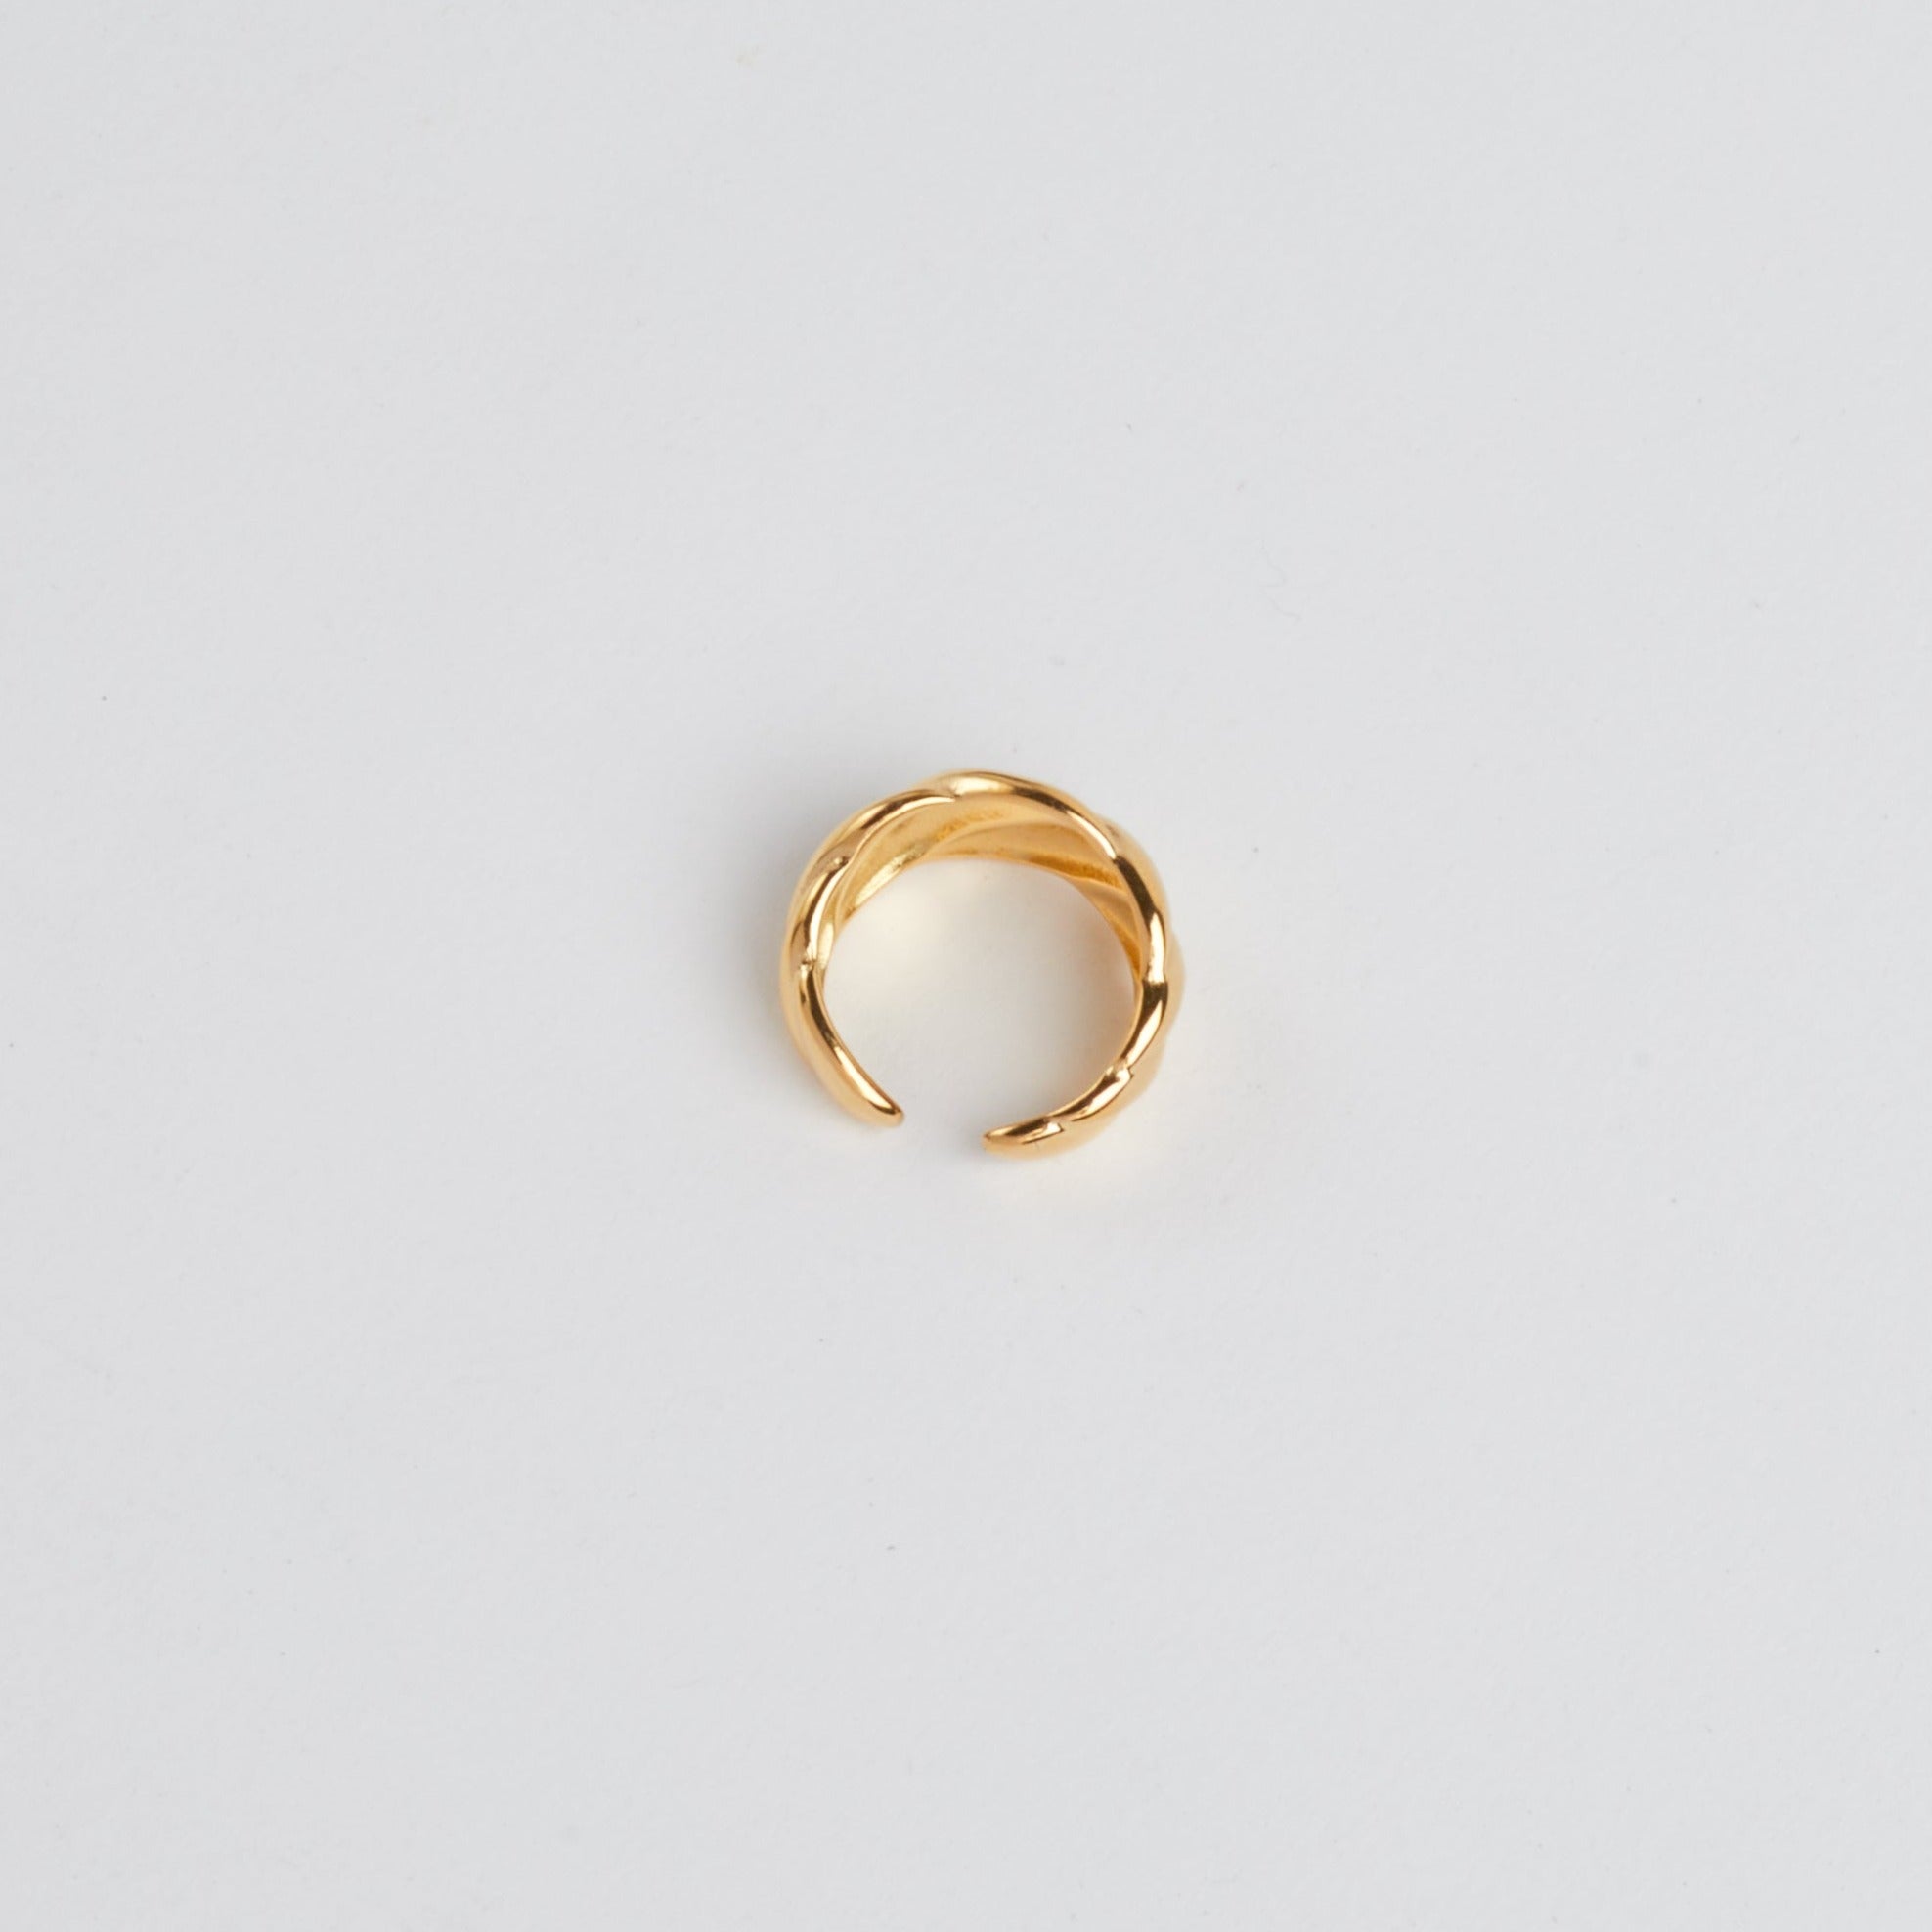 Gold Croissant Ring on white background.